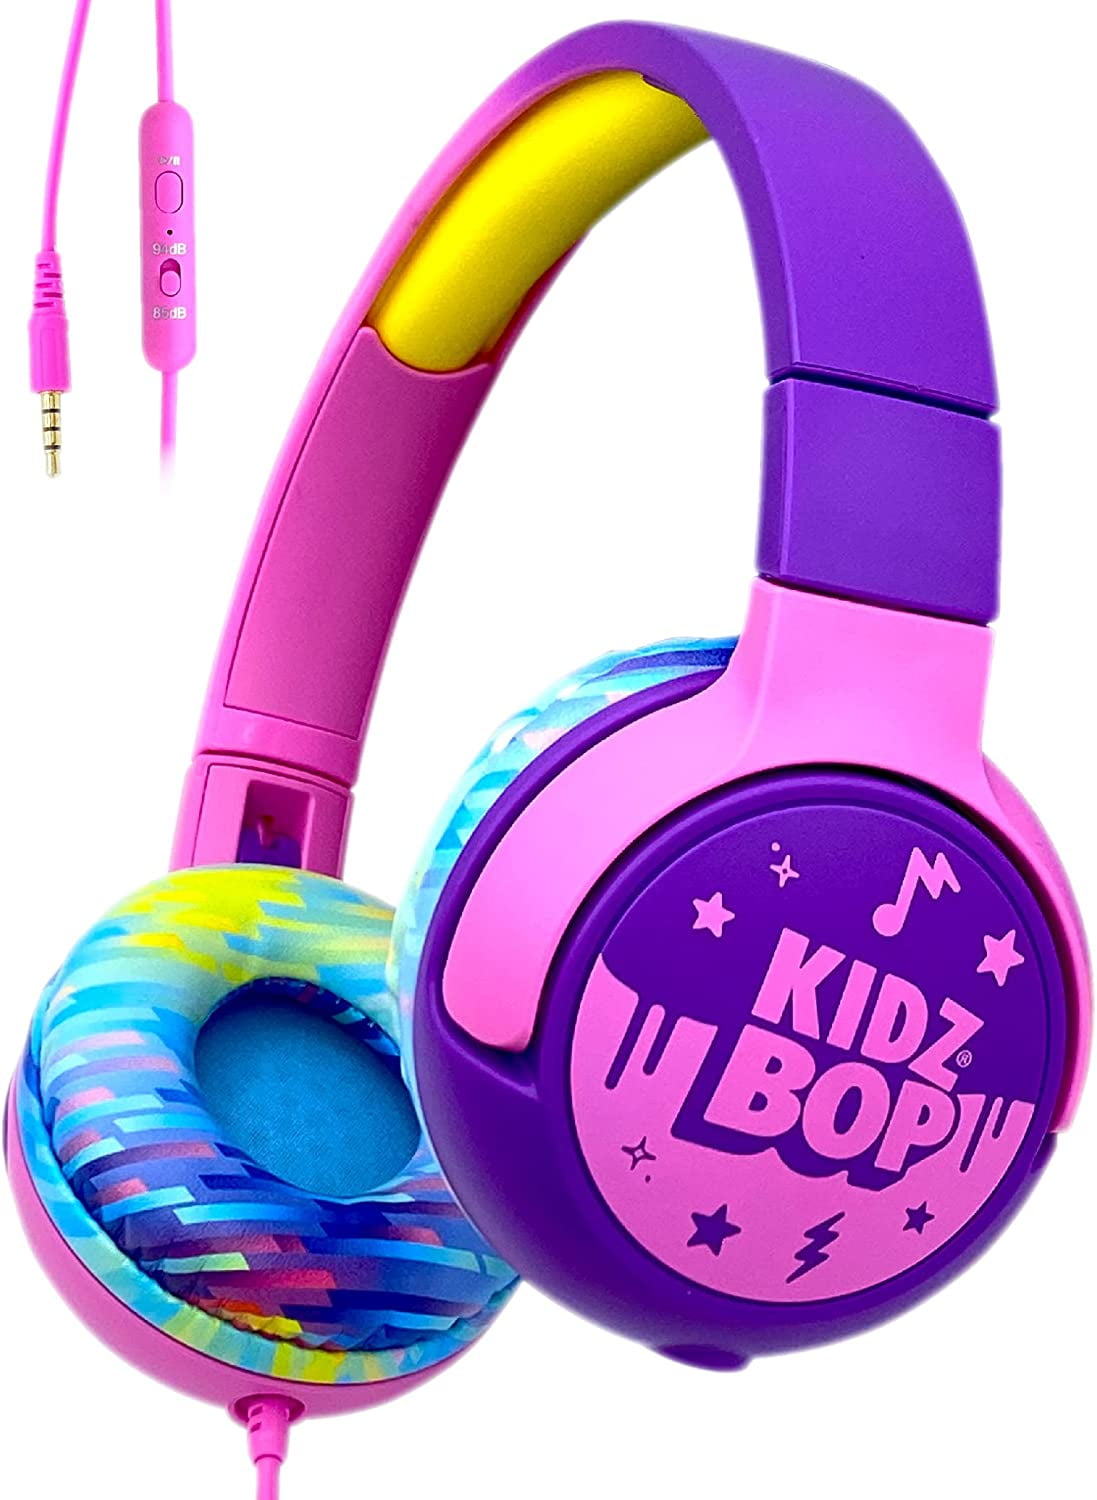 Move2Play Kidz Bop Wired Headphones | Adjustable & Foldable